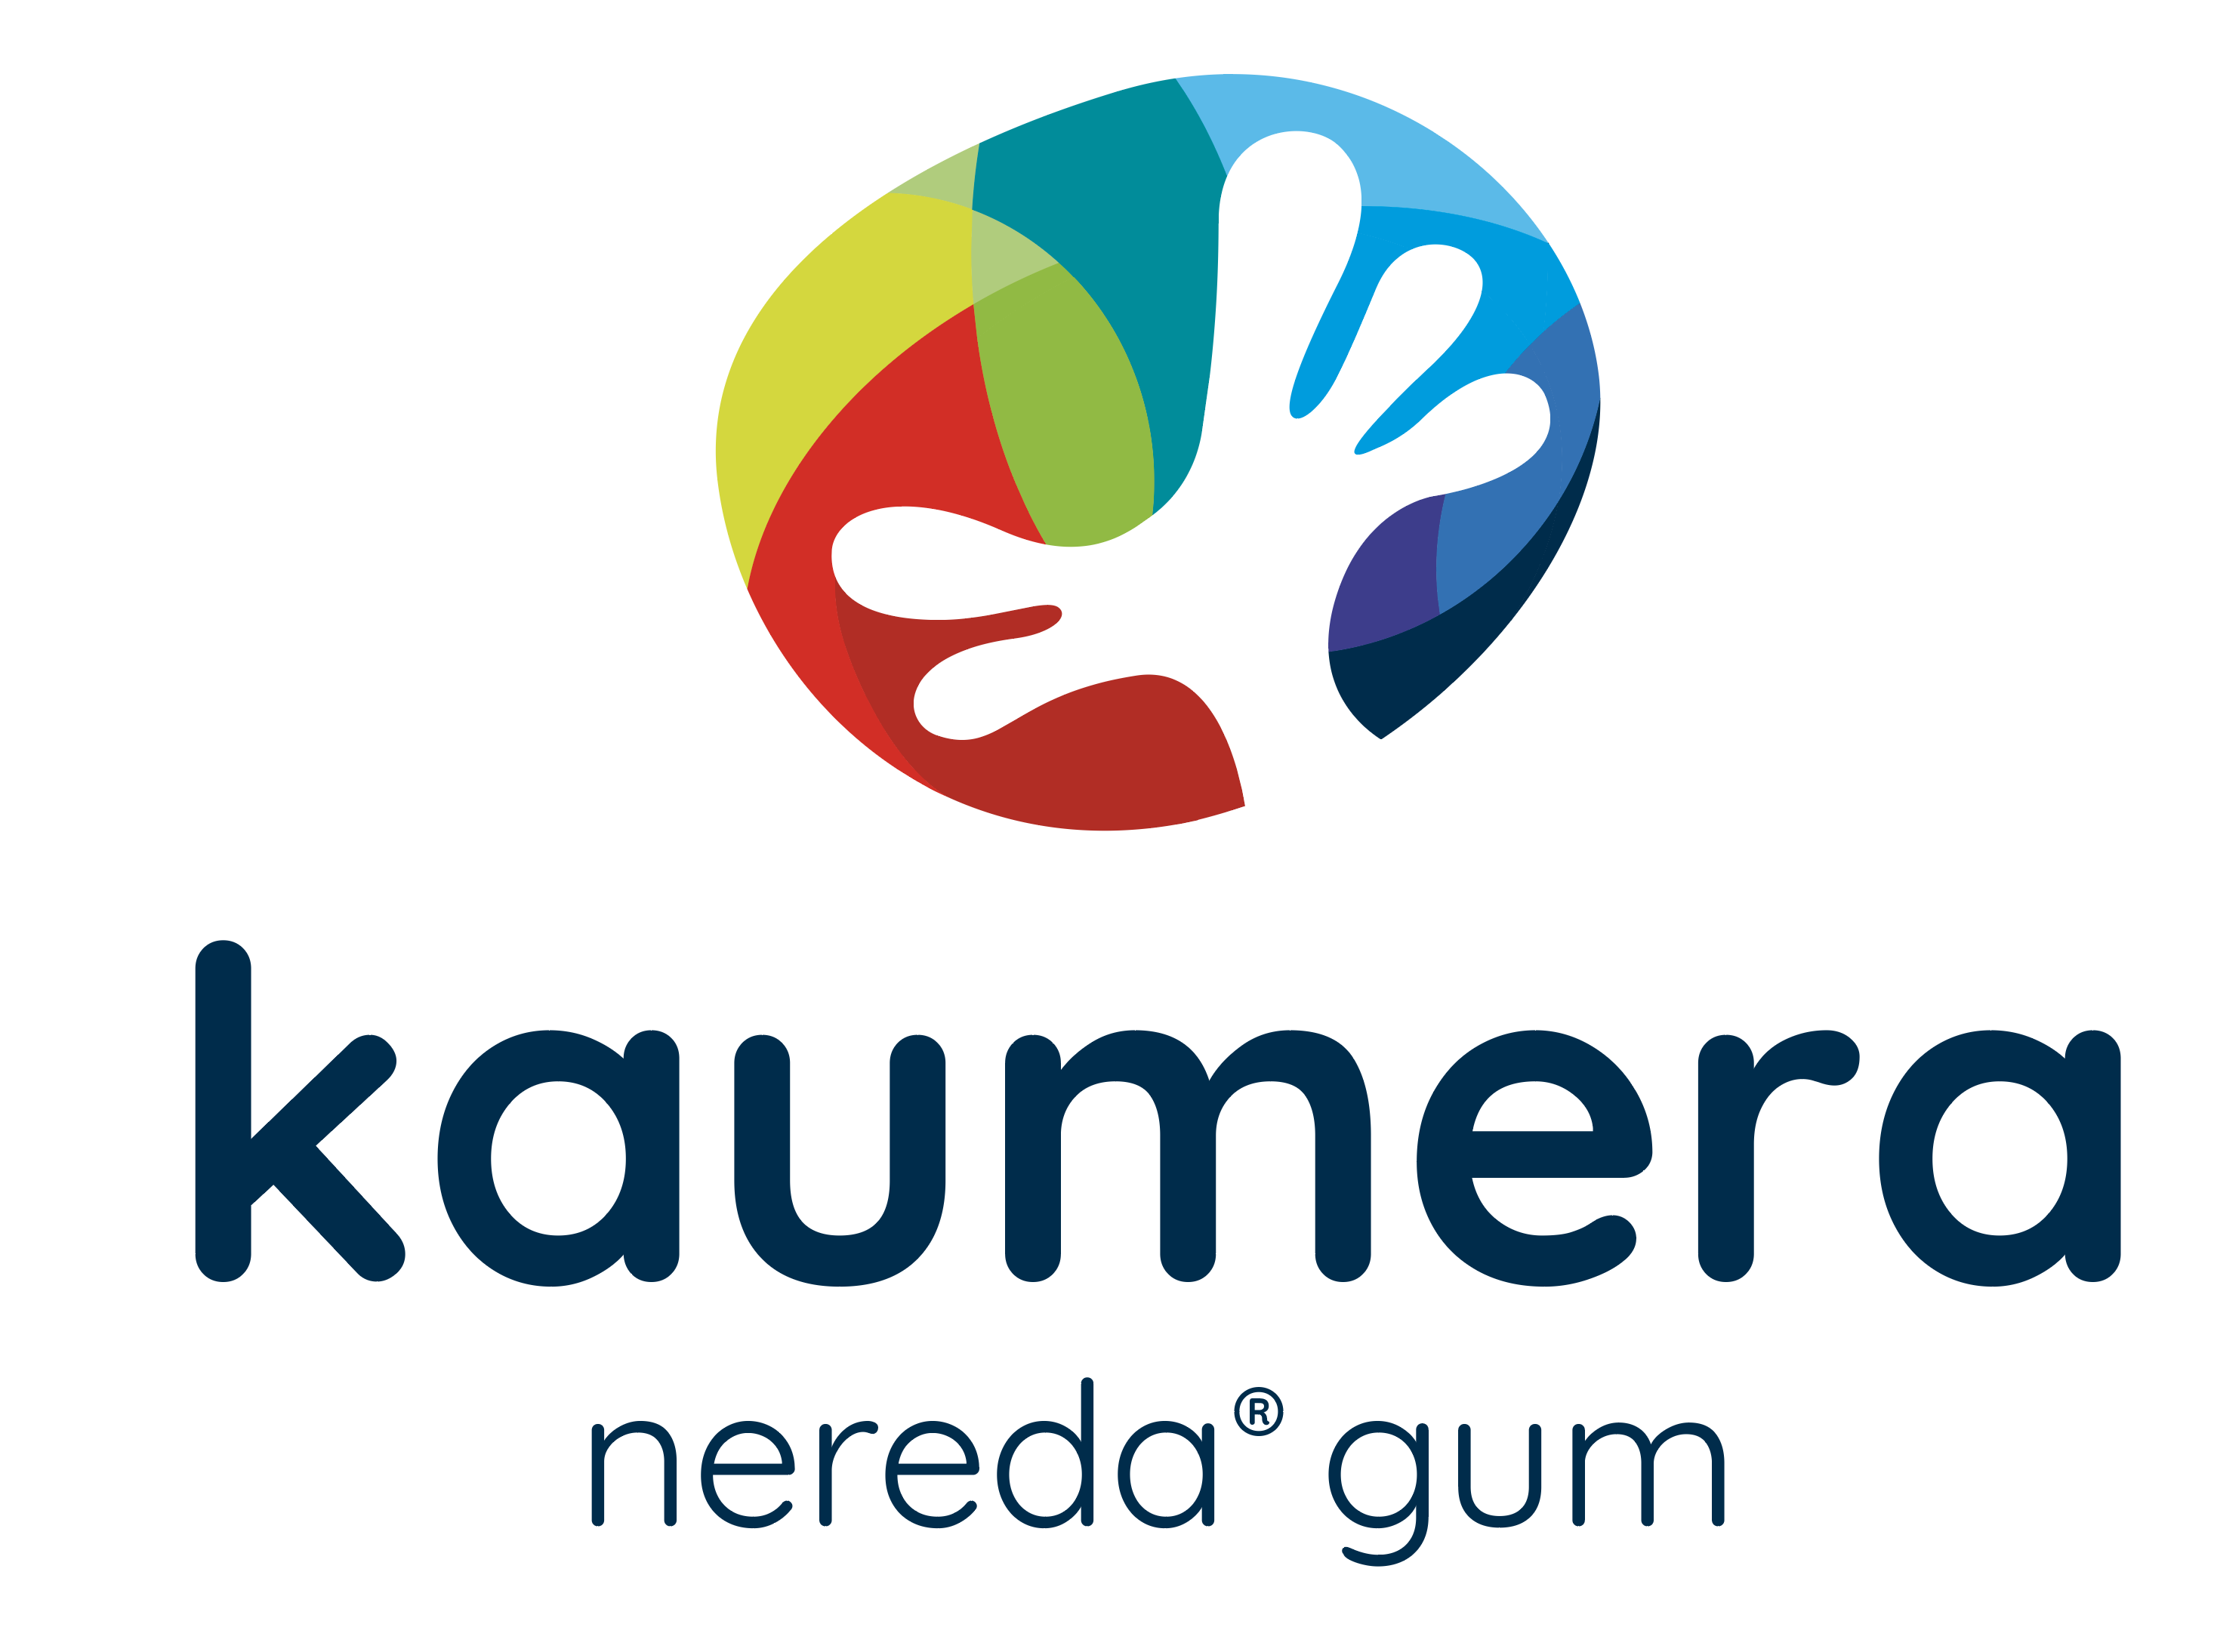 Logo Kaumera